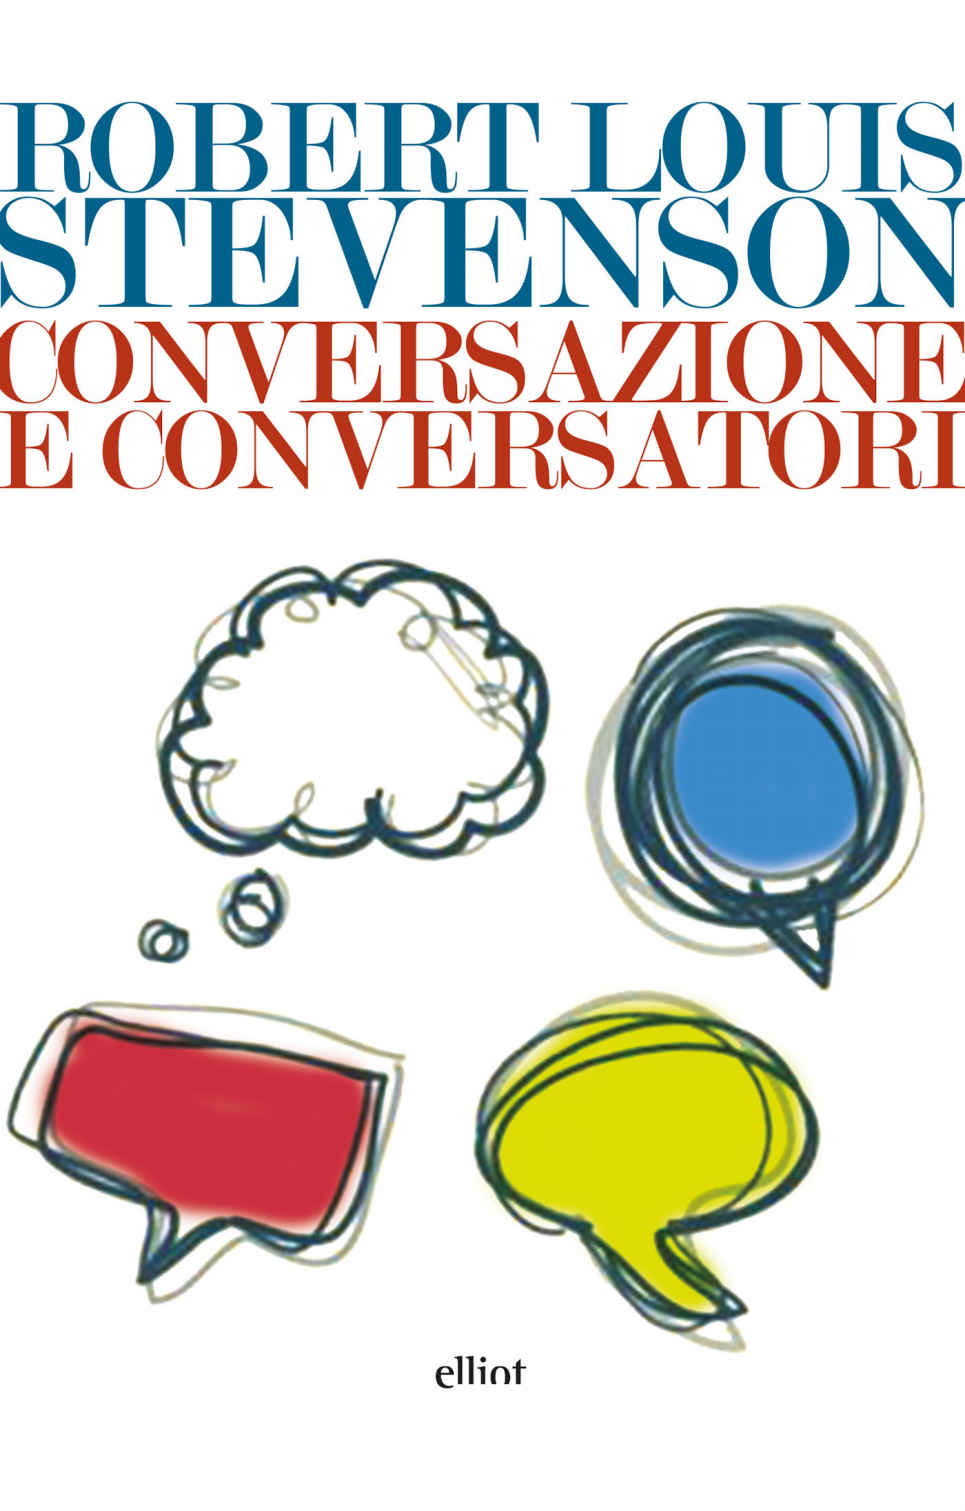 Robert Louis Stevenson: "Conversazione e conversatori"